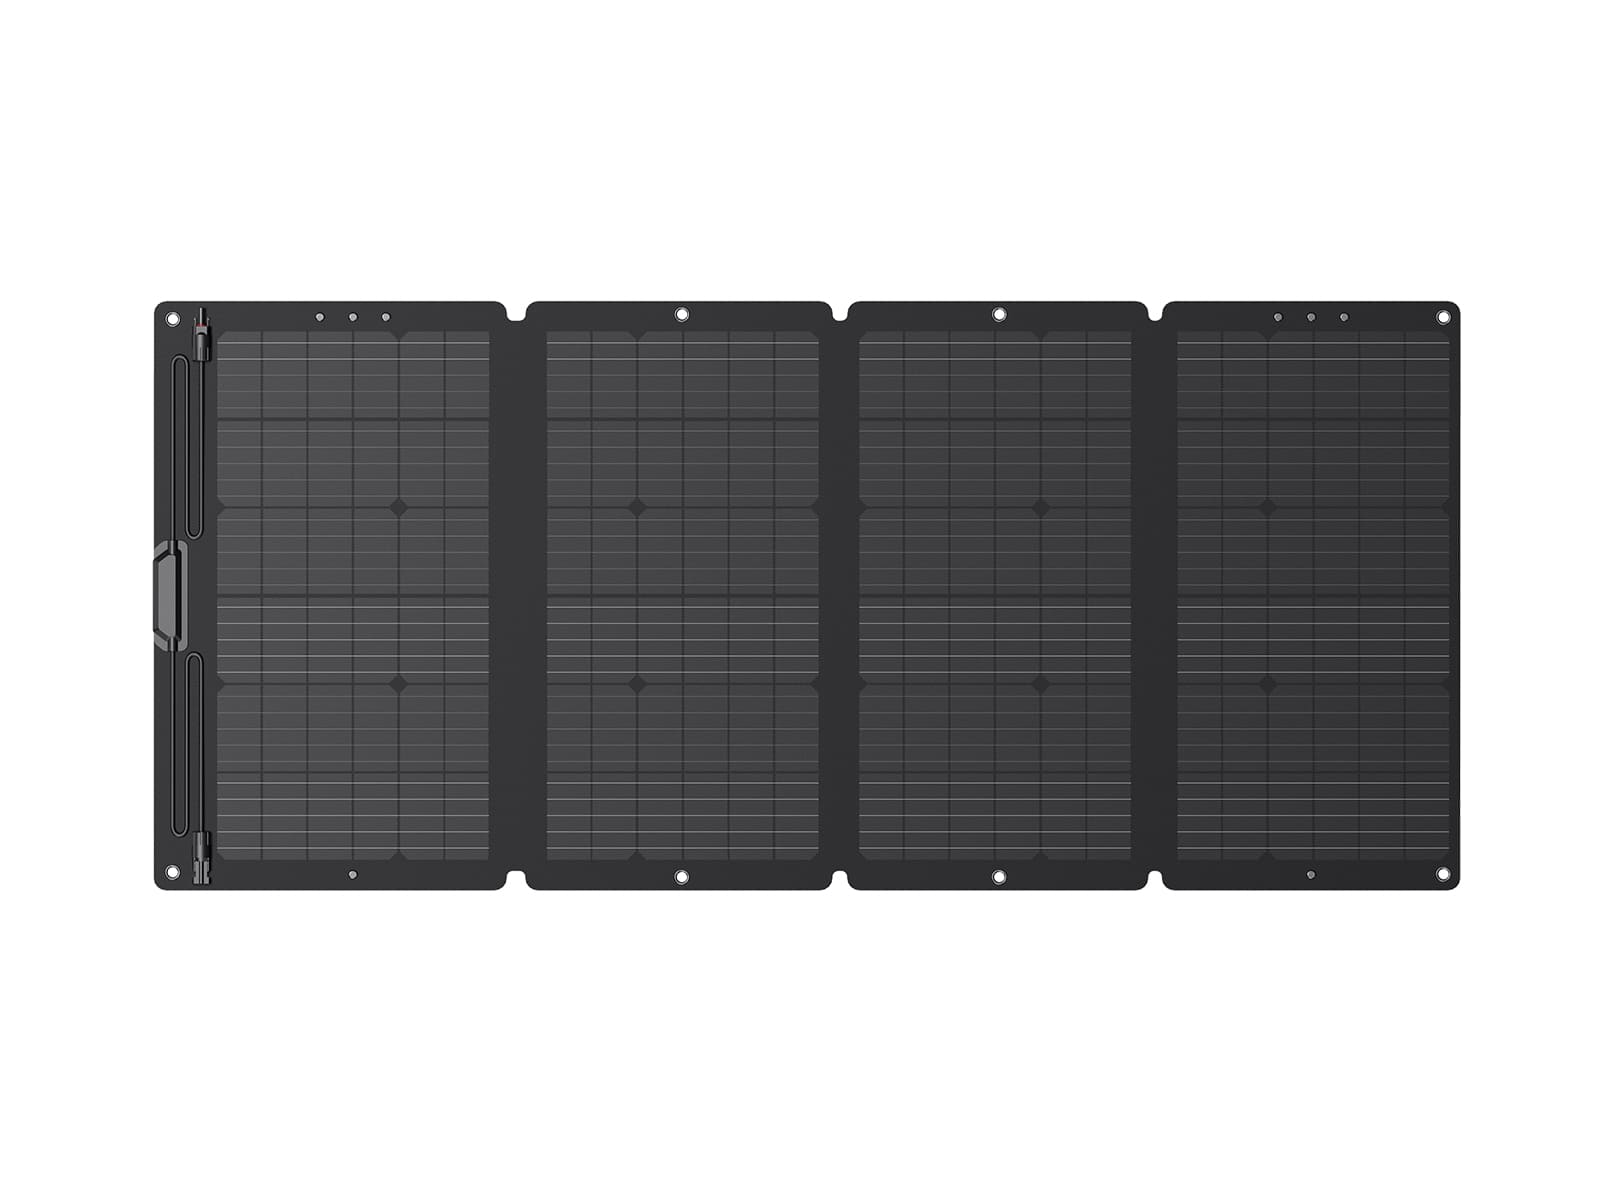 Portable solar panel KS SP120W-4